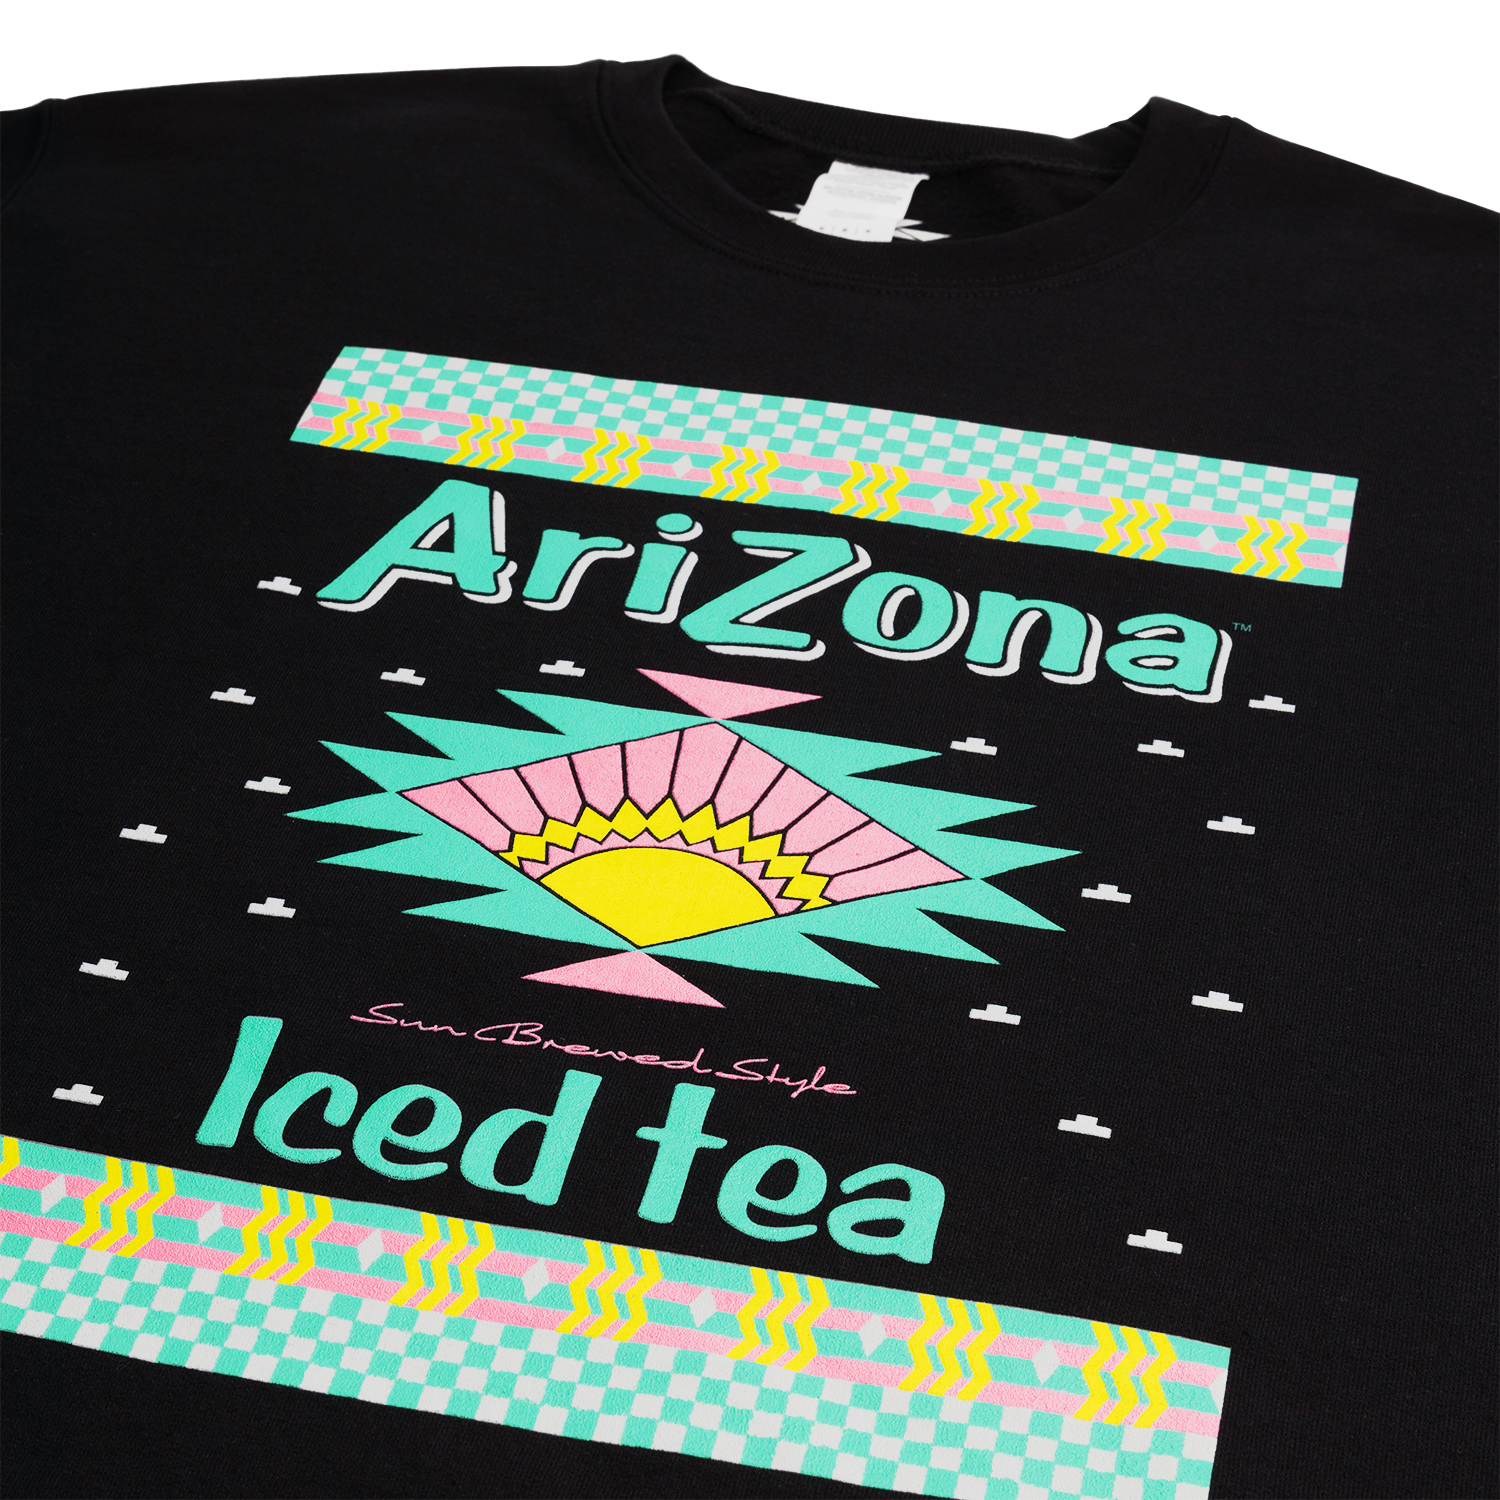 AriZona Iced Tea – Europe Sweater AriZona Black